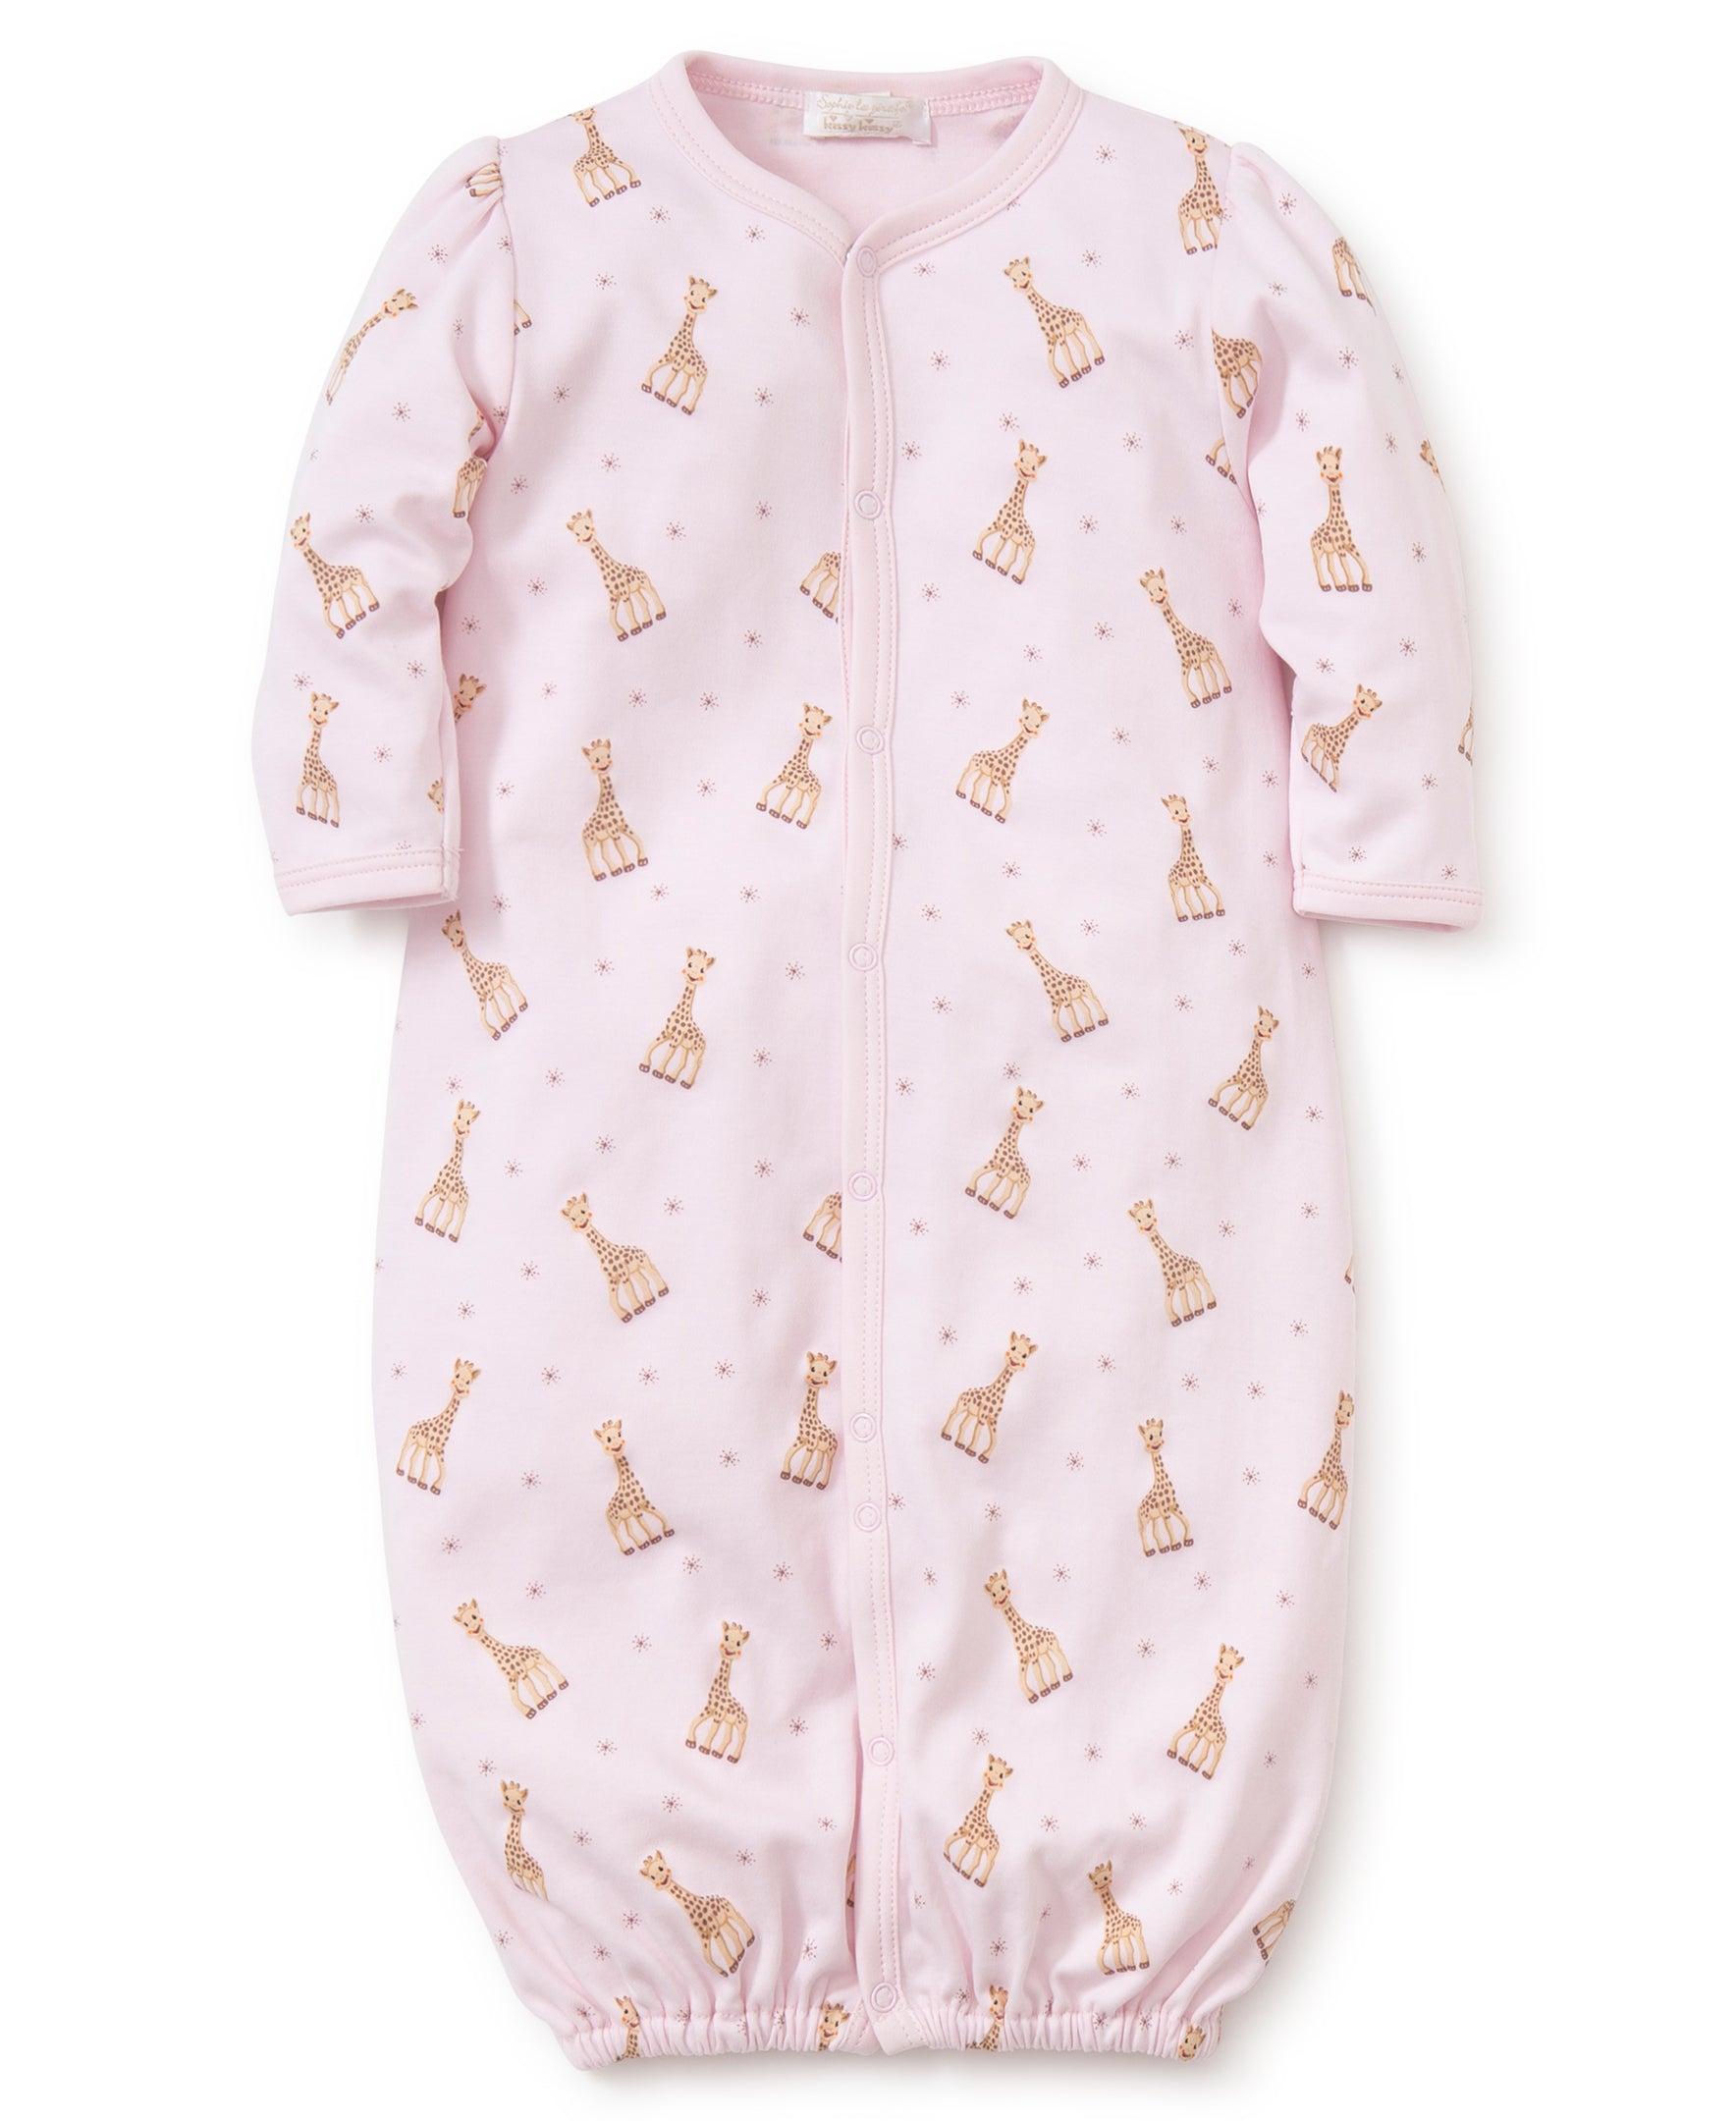 Sophie la girafe Pink Print Converter Gown